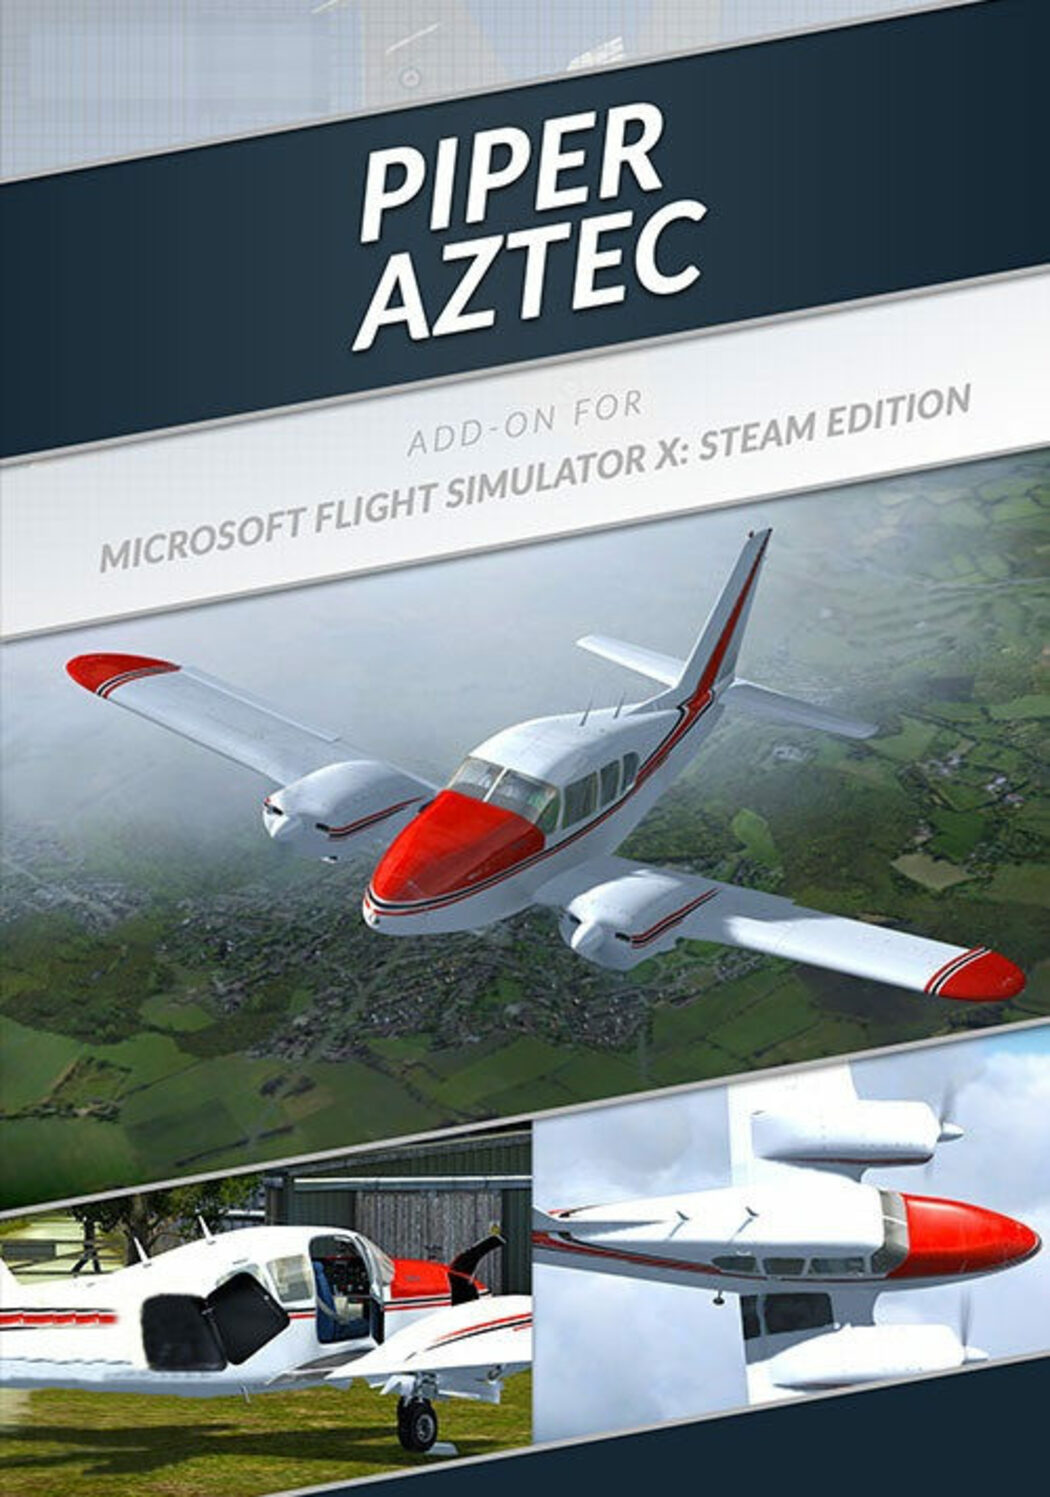 flight simulator steam edition